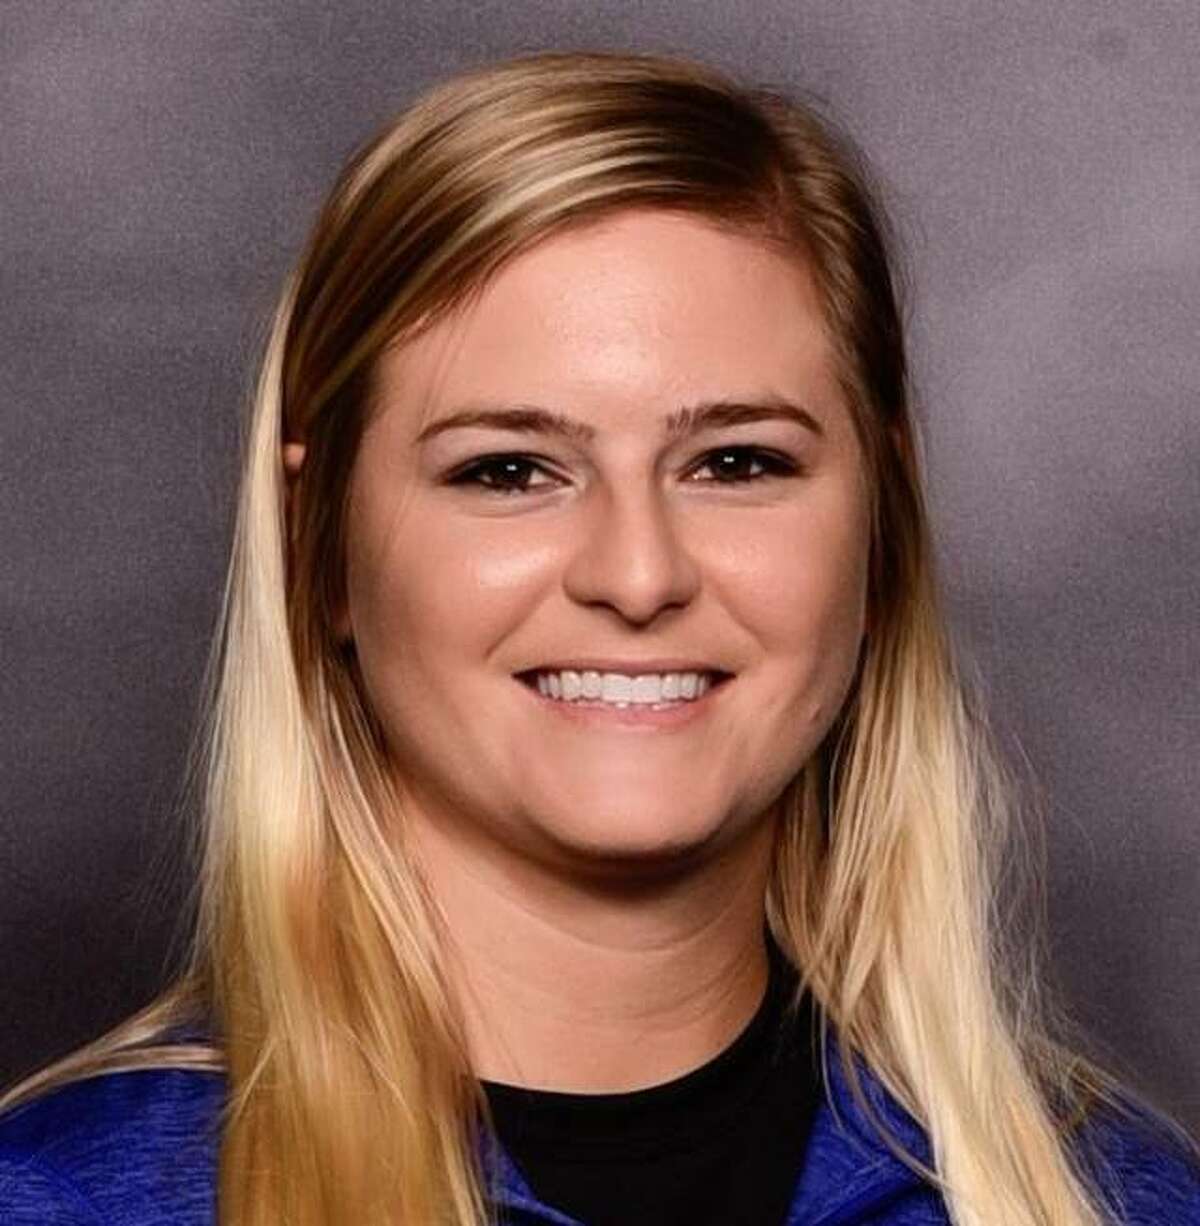 Alyssa Maynard is the new girls soccer coach at Willis High School.